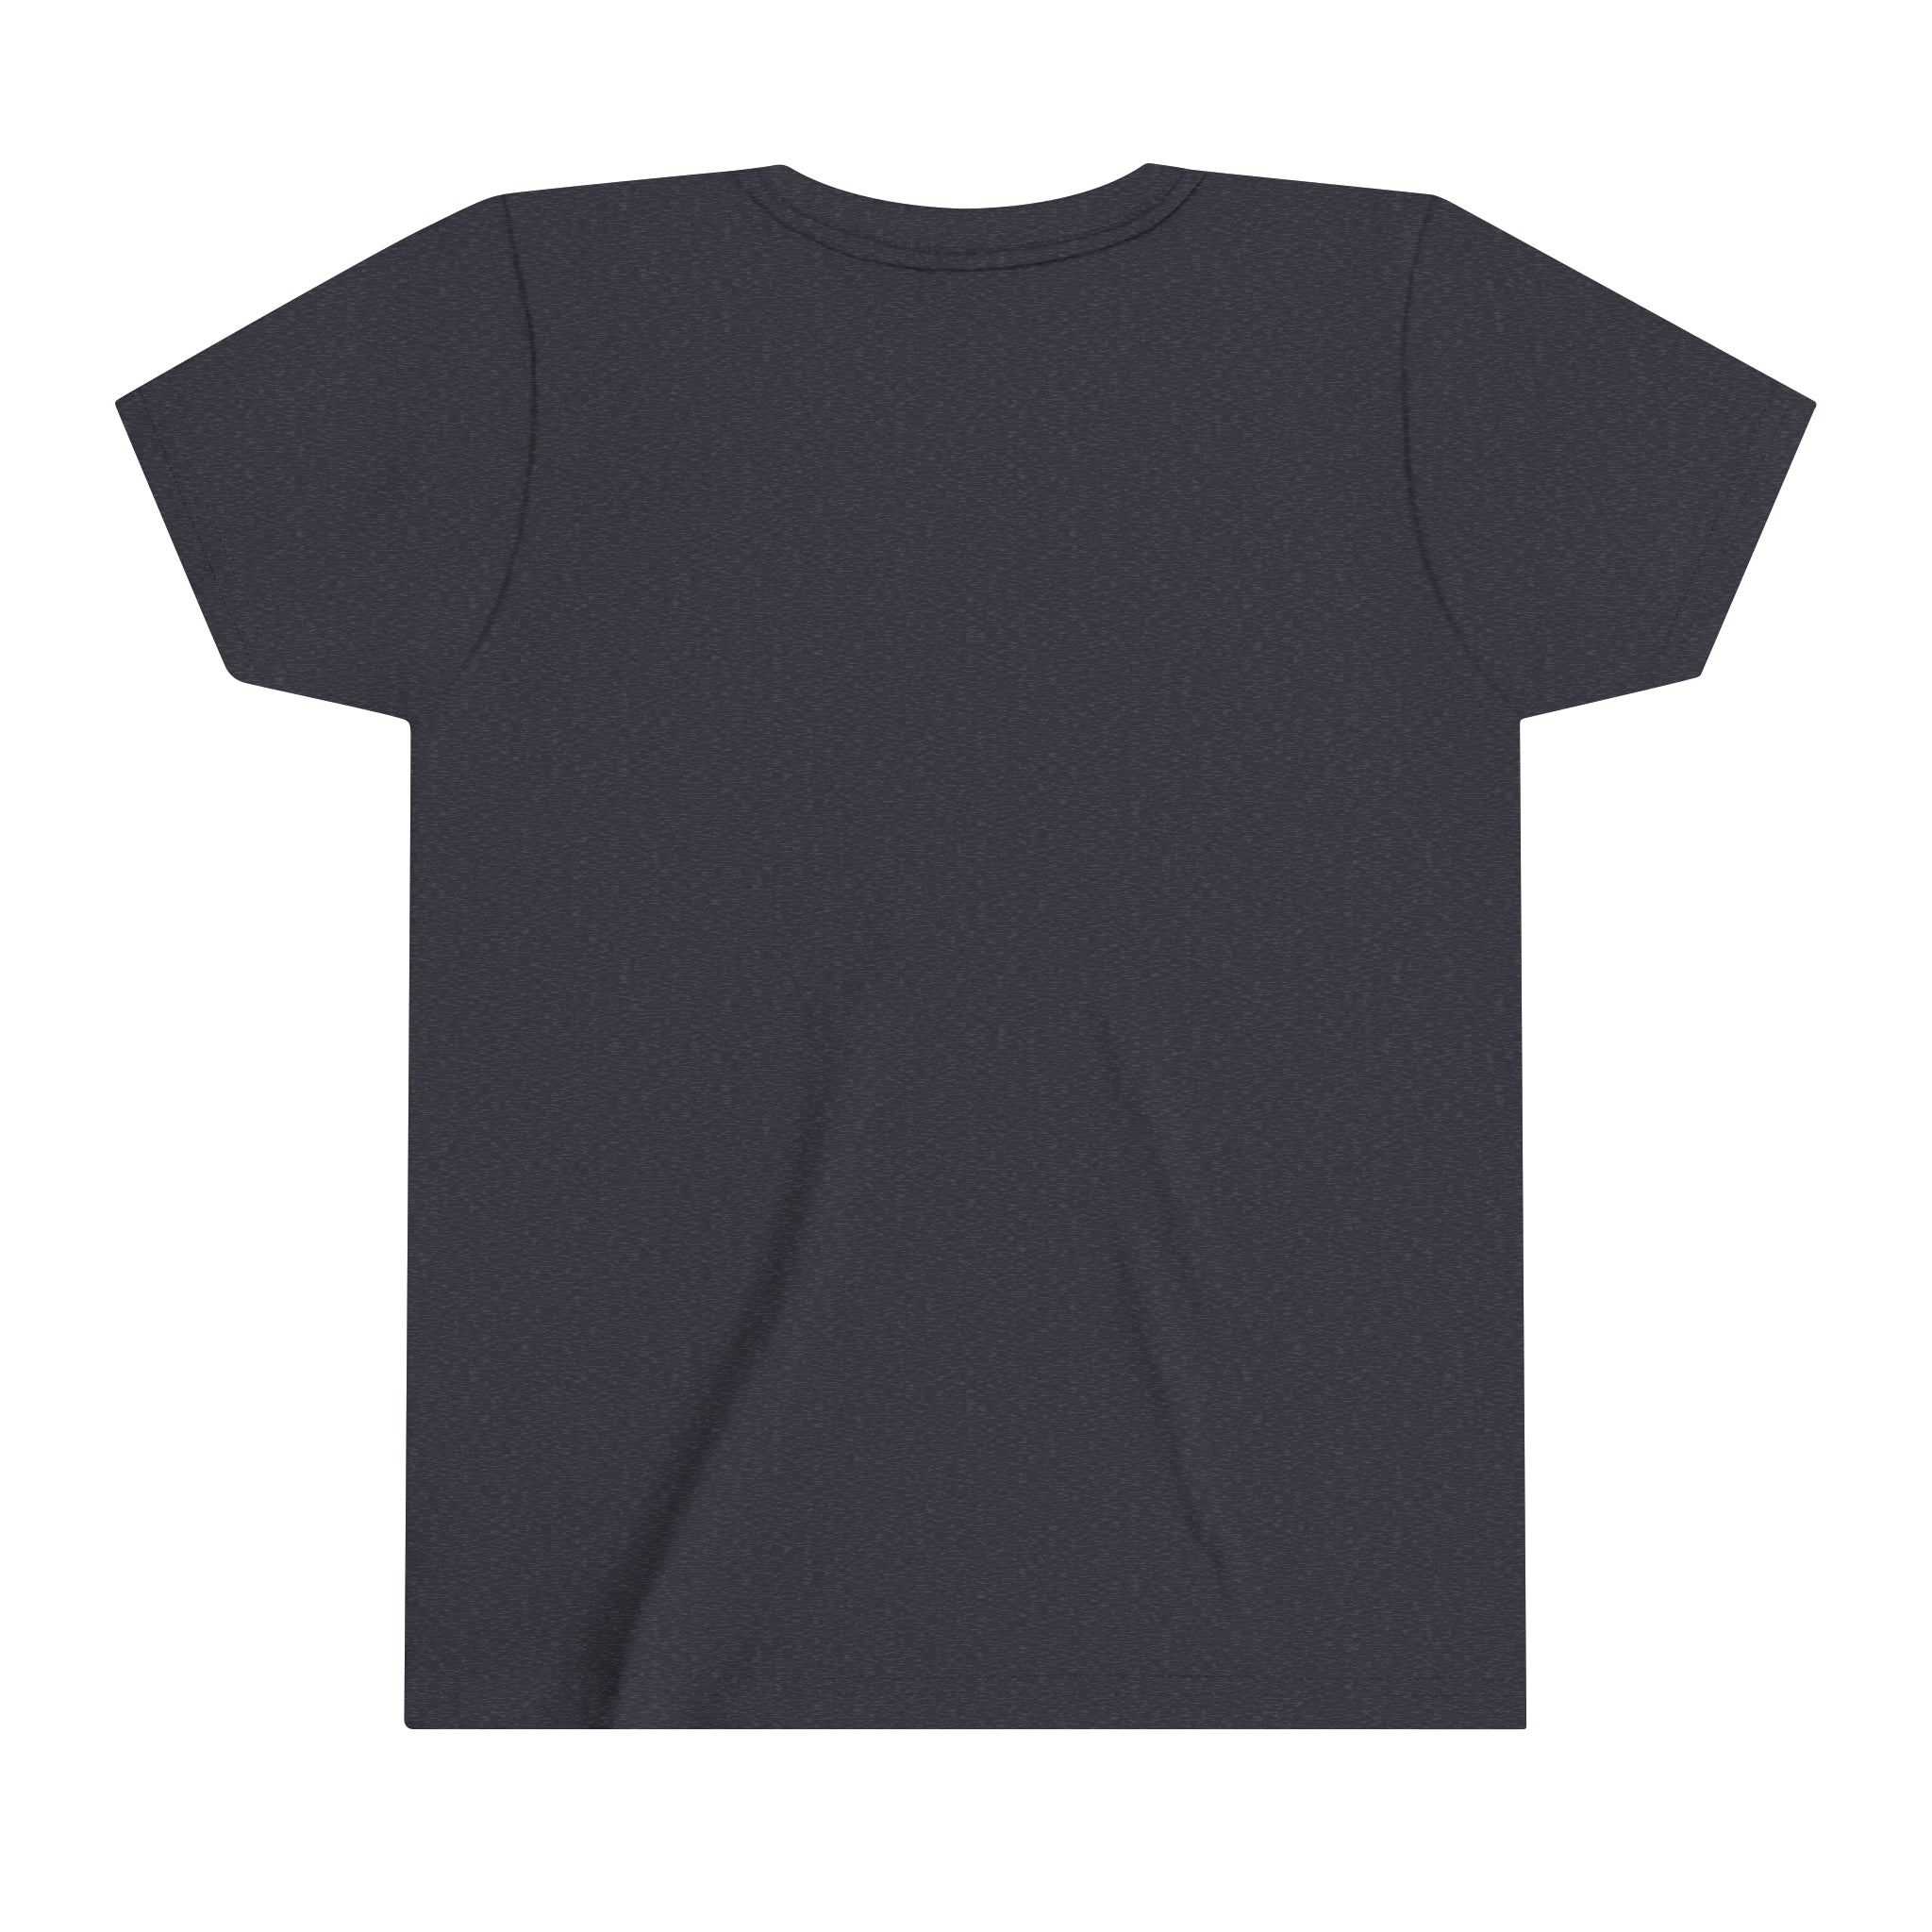 Kitty #84447 (Unisex) Youth T-Shirt